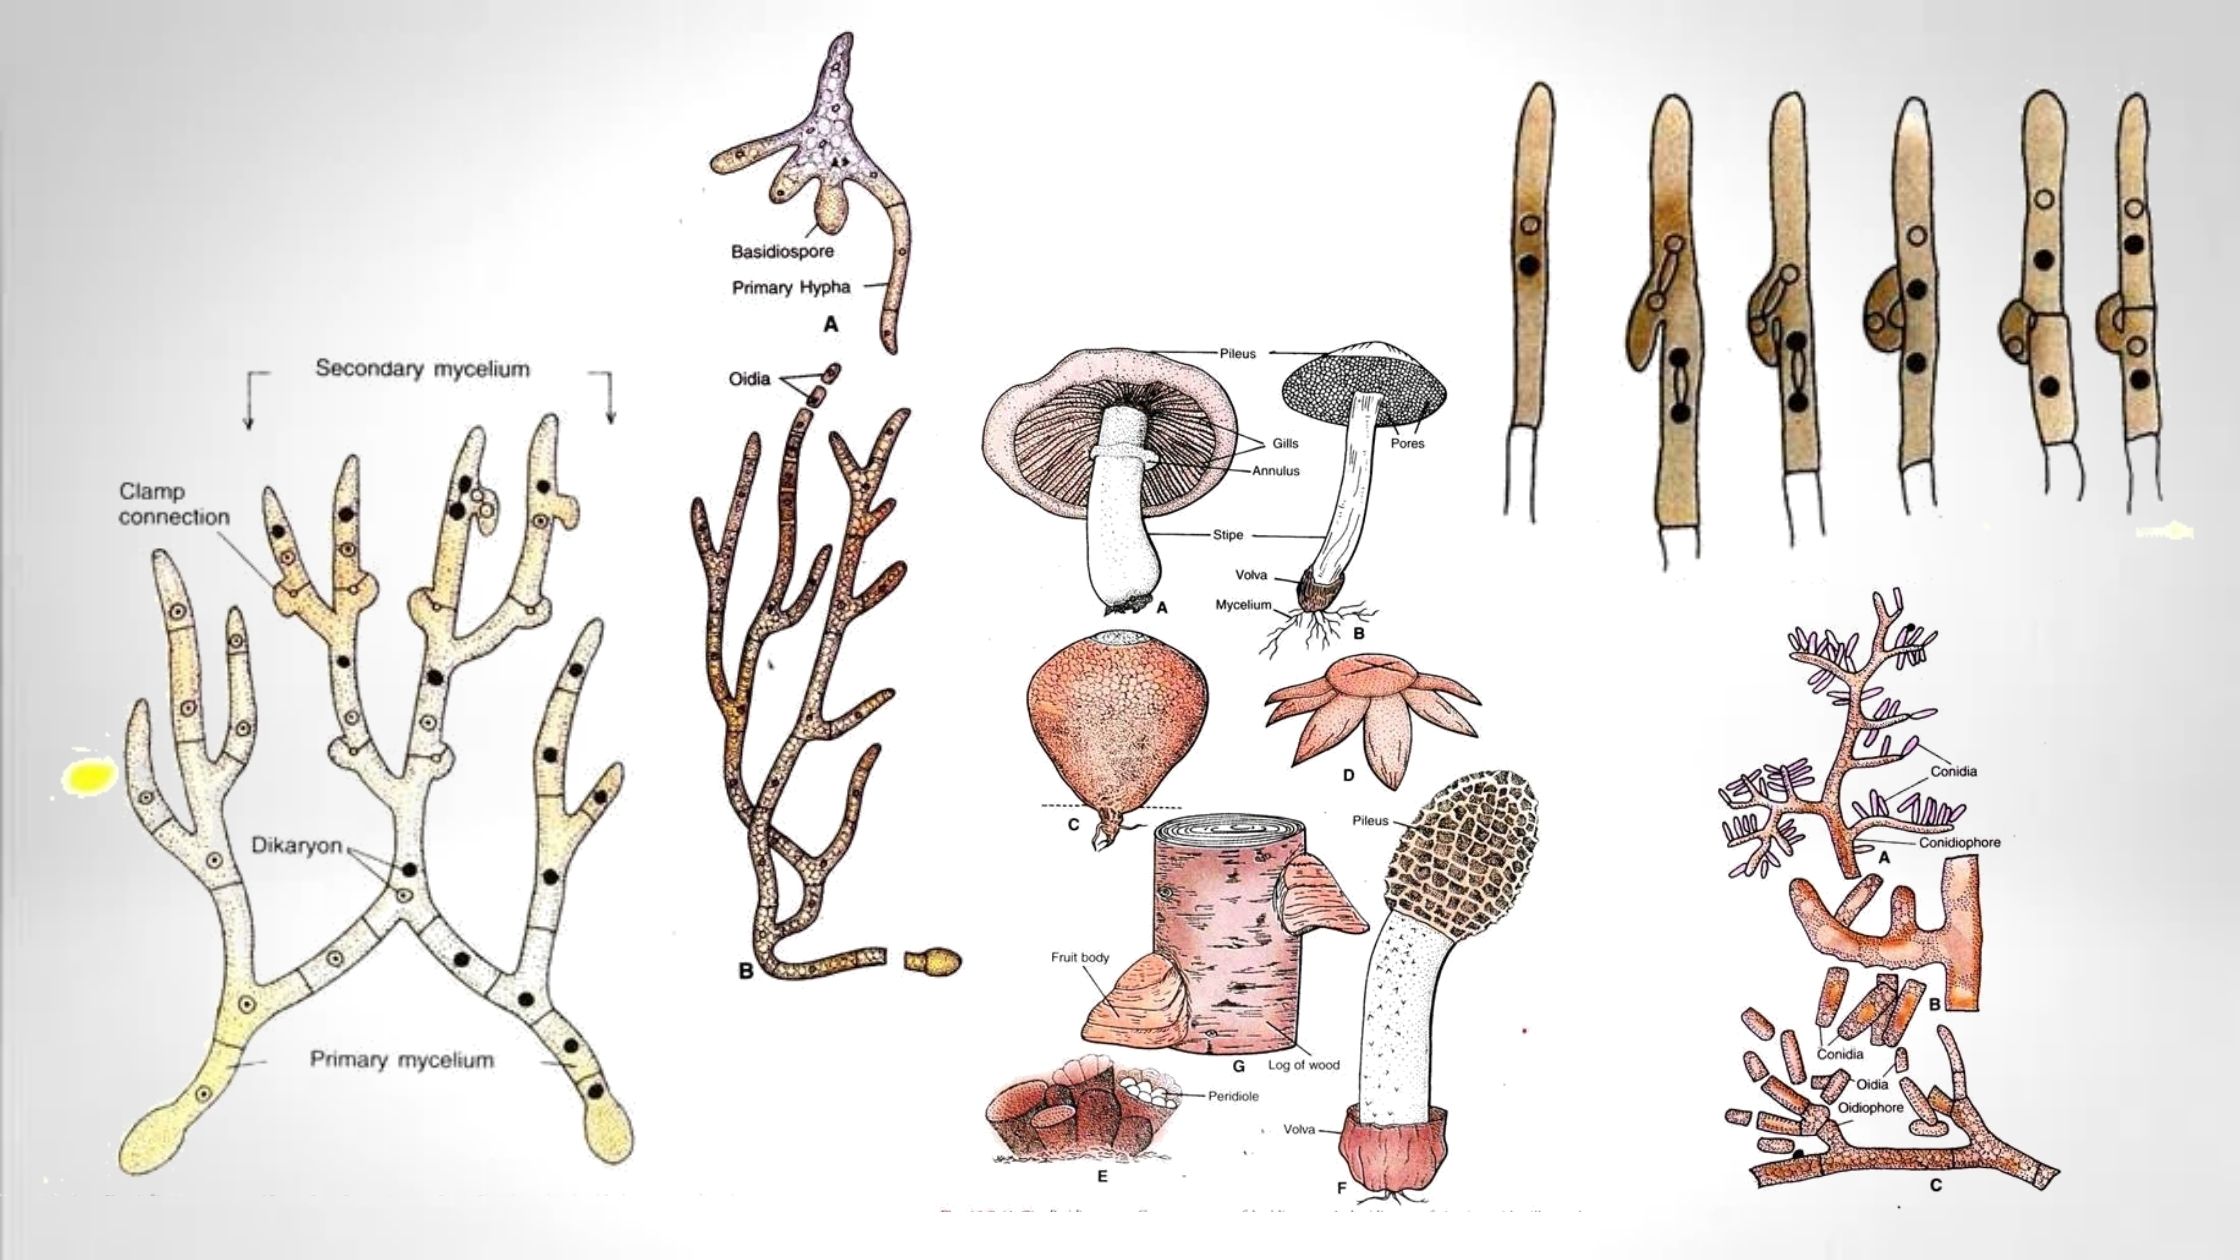 Basidiomycetes Life cycle, Characters, Significance, Mycelium